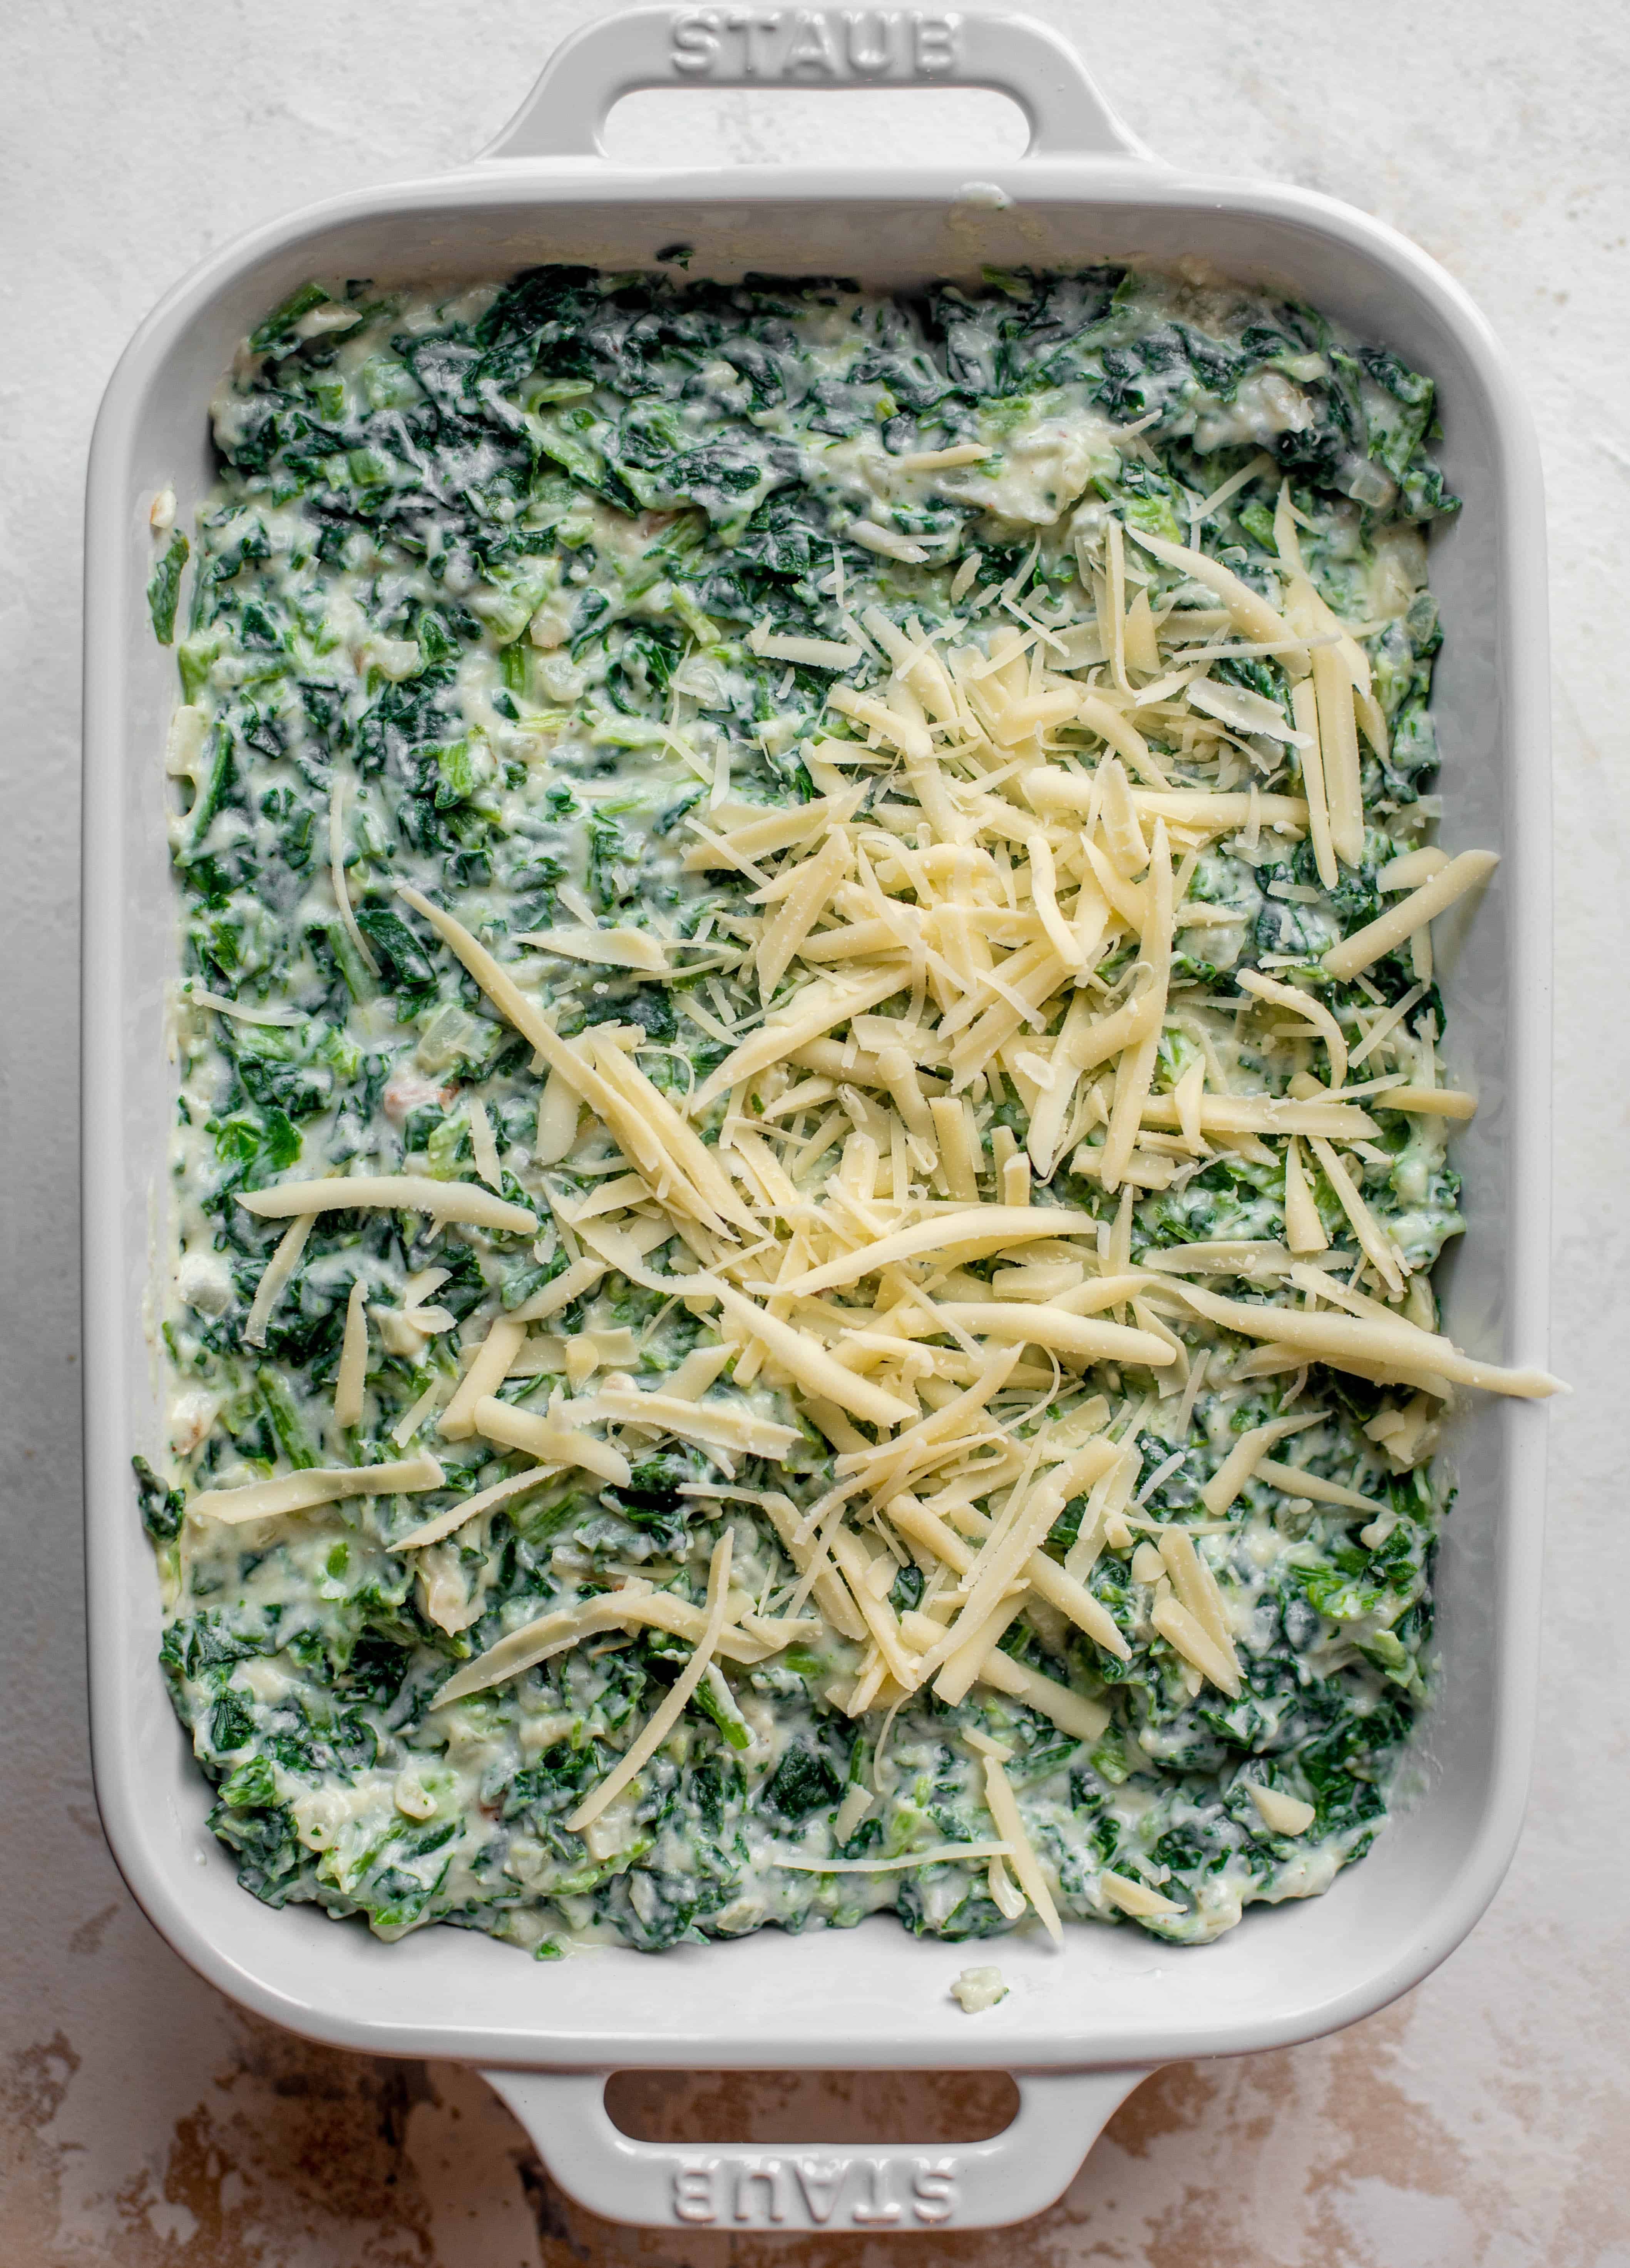 spinach gratin recipe ready to bake